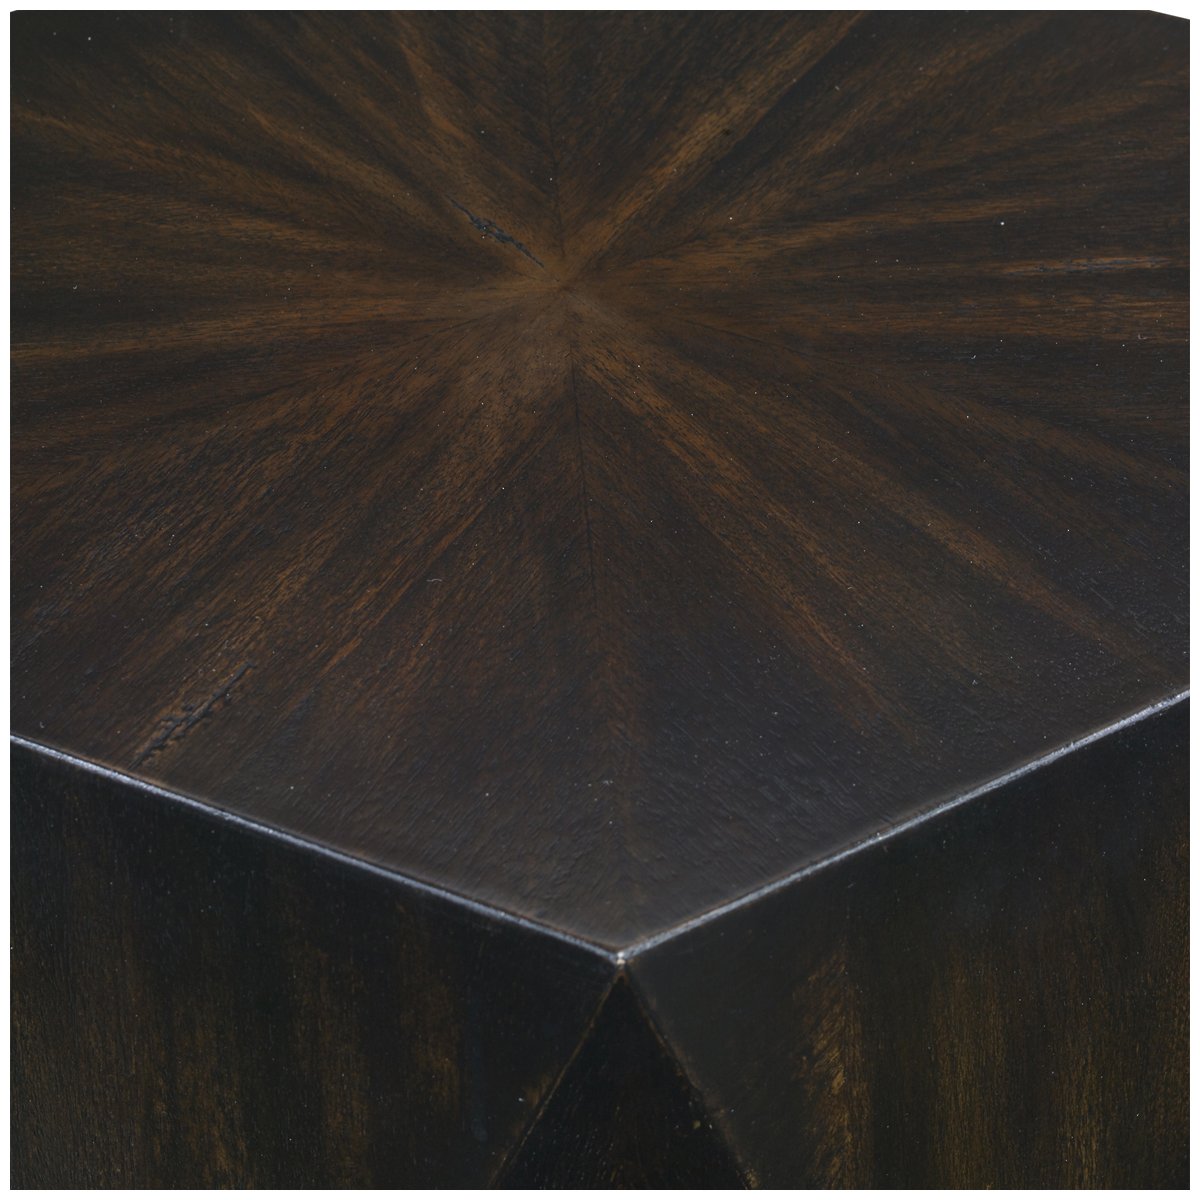 Uttermost Volker Black Wooden Side Table